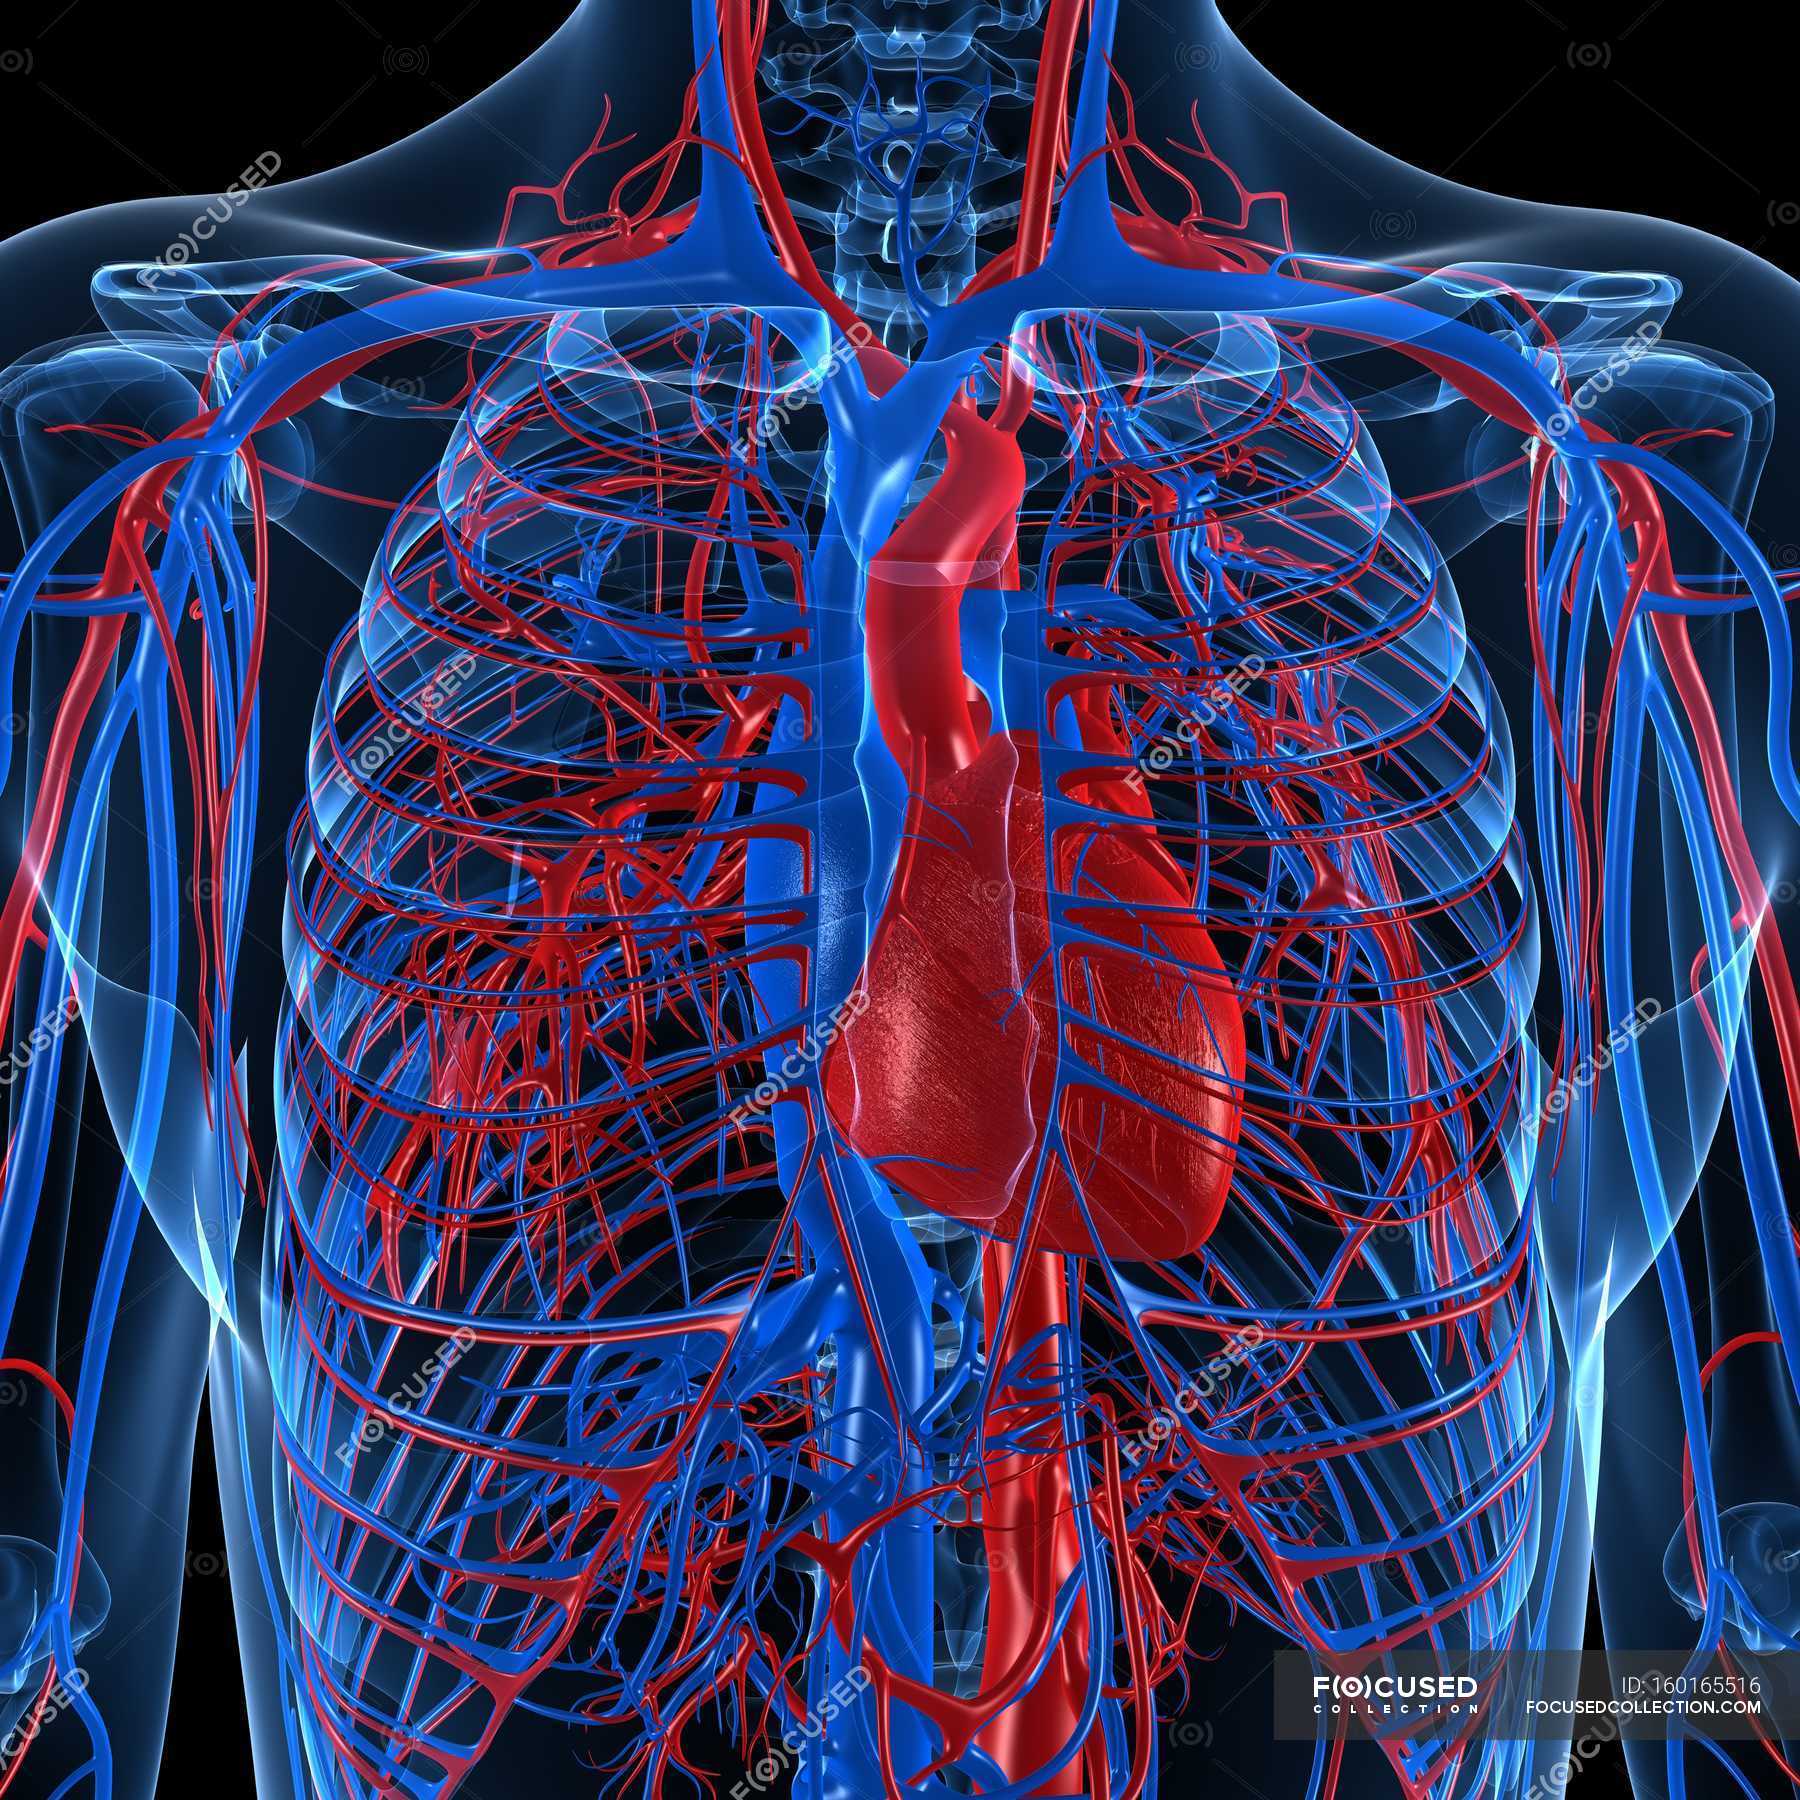 heart and vascular